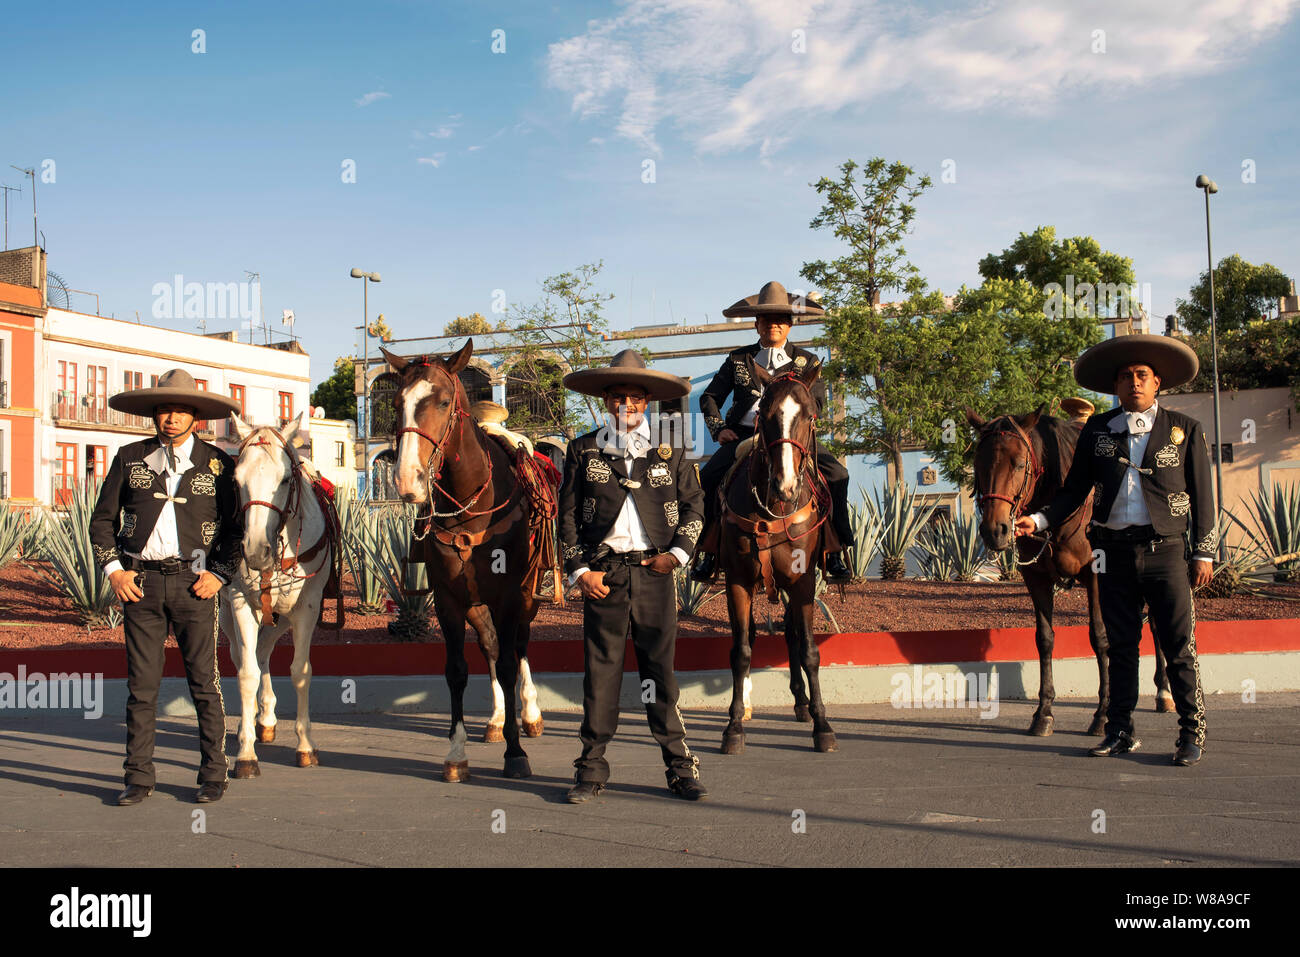 The Charro Police (with sombreros and their horses) on Garibaldi Square, Mexico City, Mexico. Jun 2019 Stock Photo